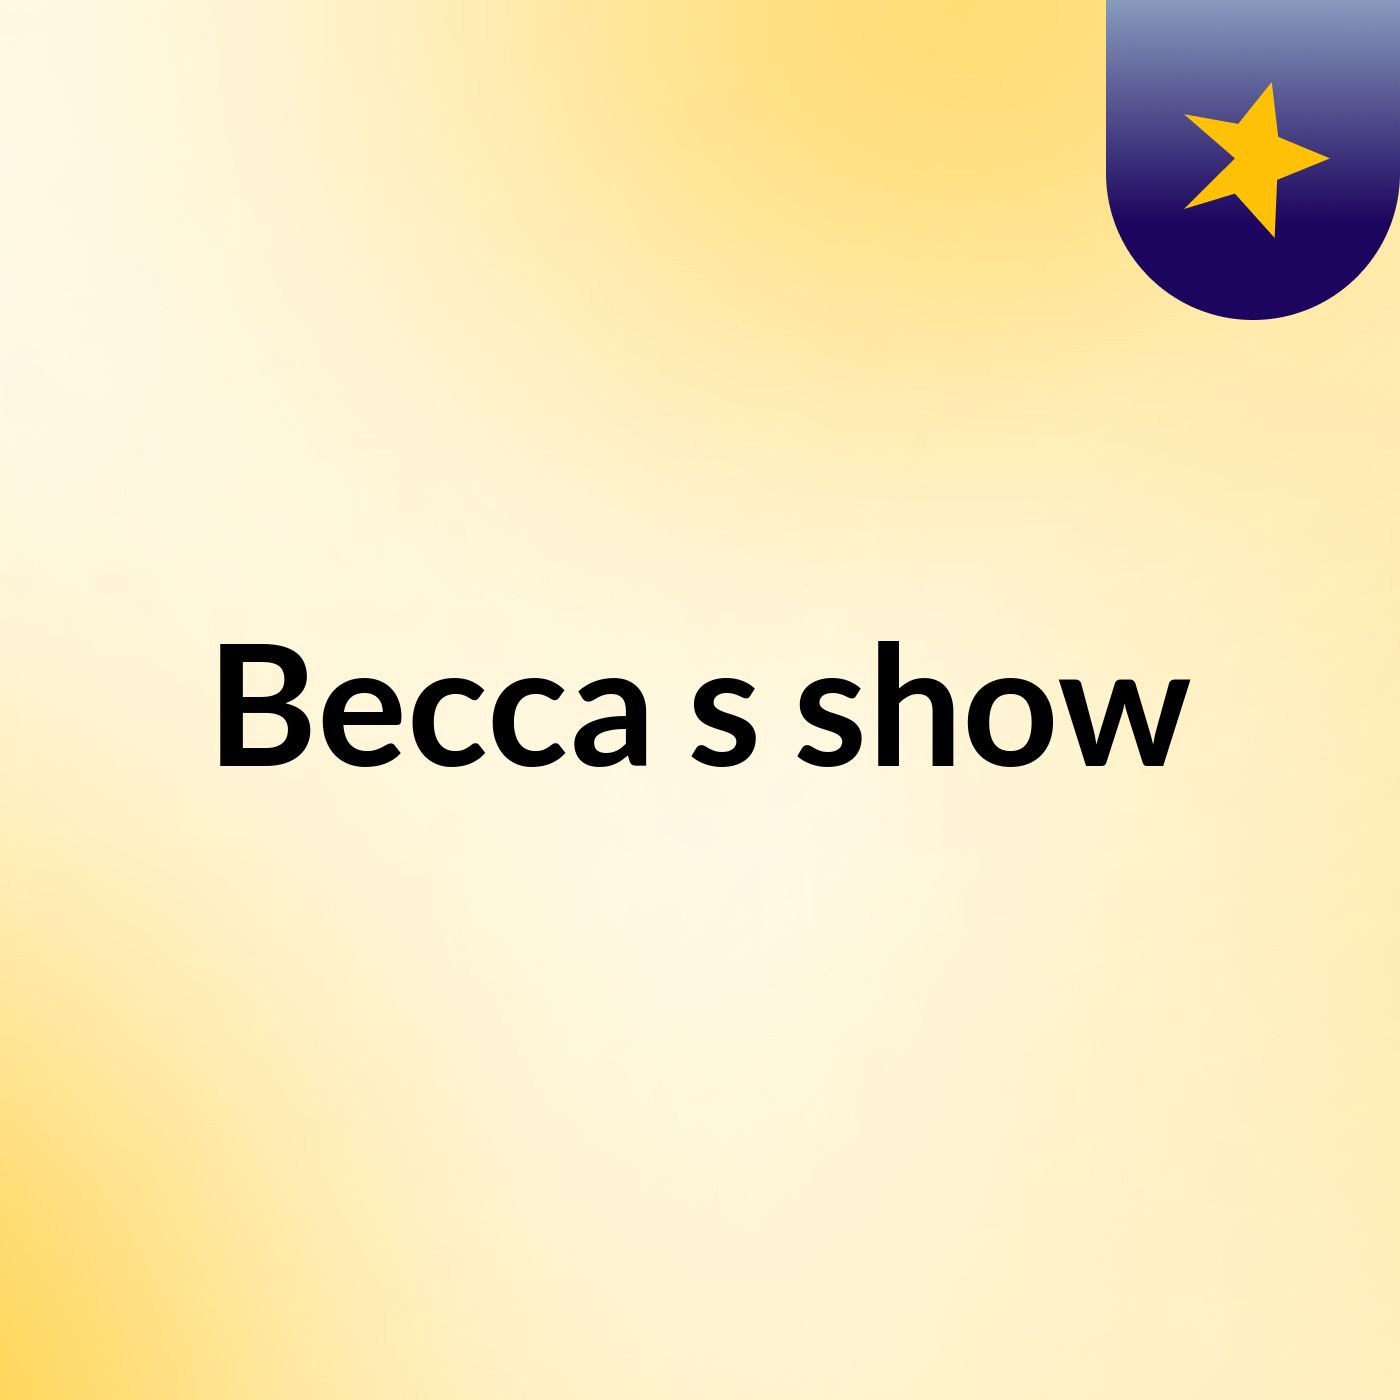 Becca's show